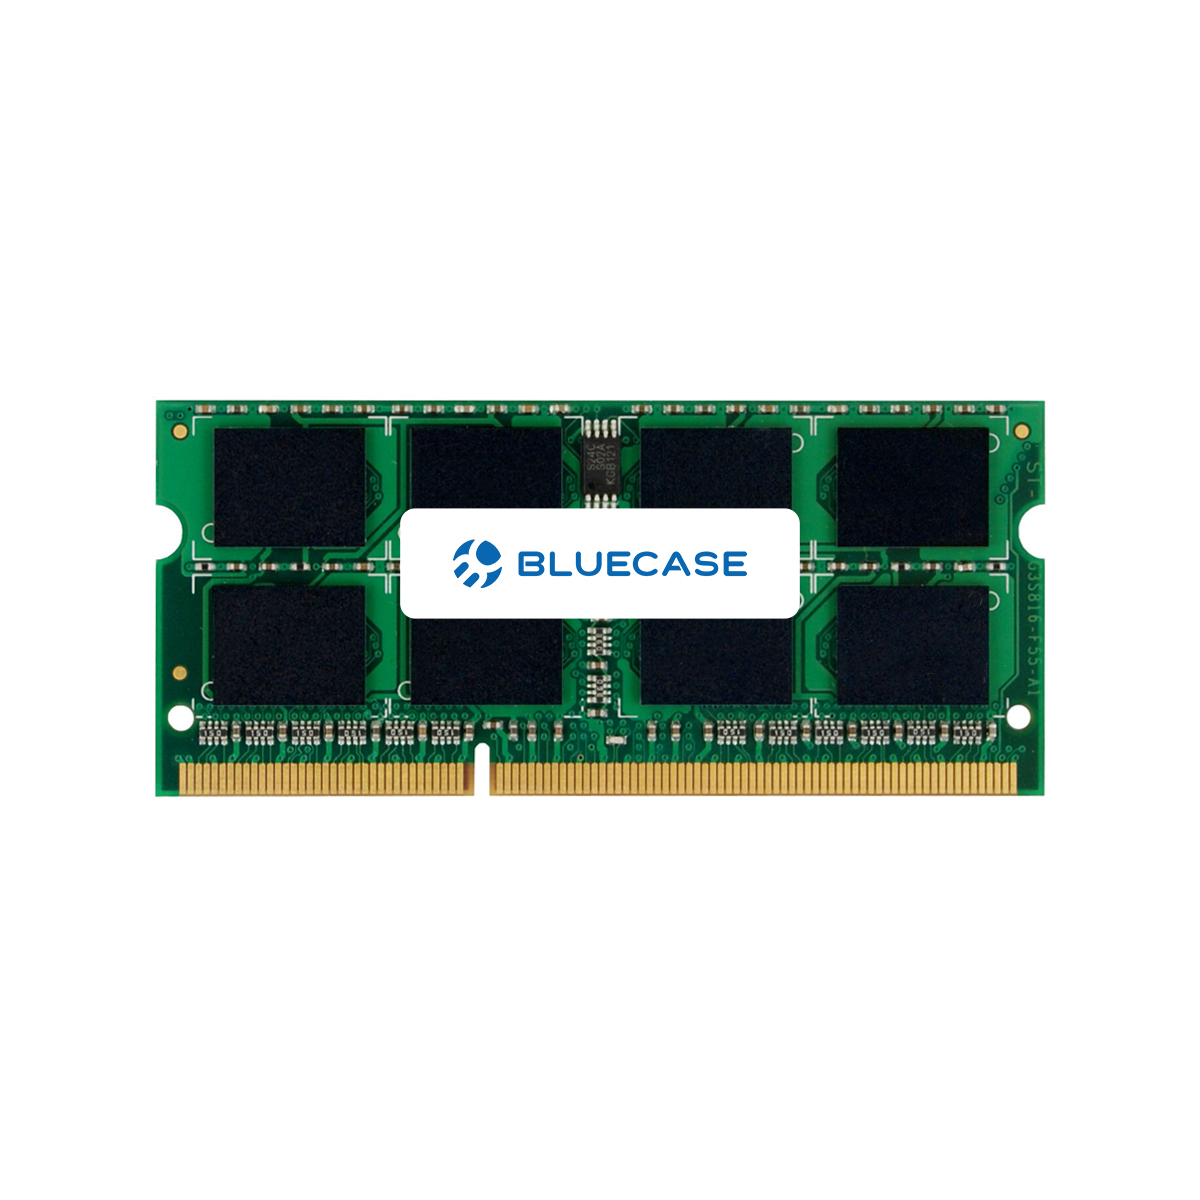 MEMÓRIA RAM DDR3 1333MHz SODIMM LOW VOLTAGE 1.35V BMTSO3D13M135VE9/4G - 1